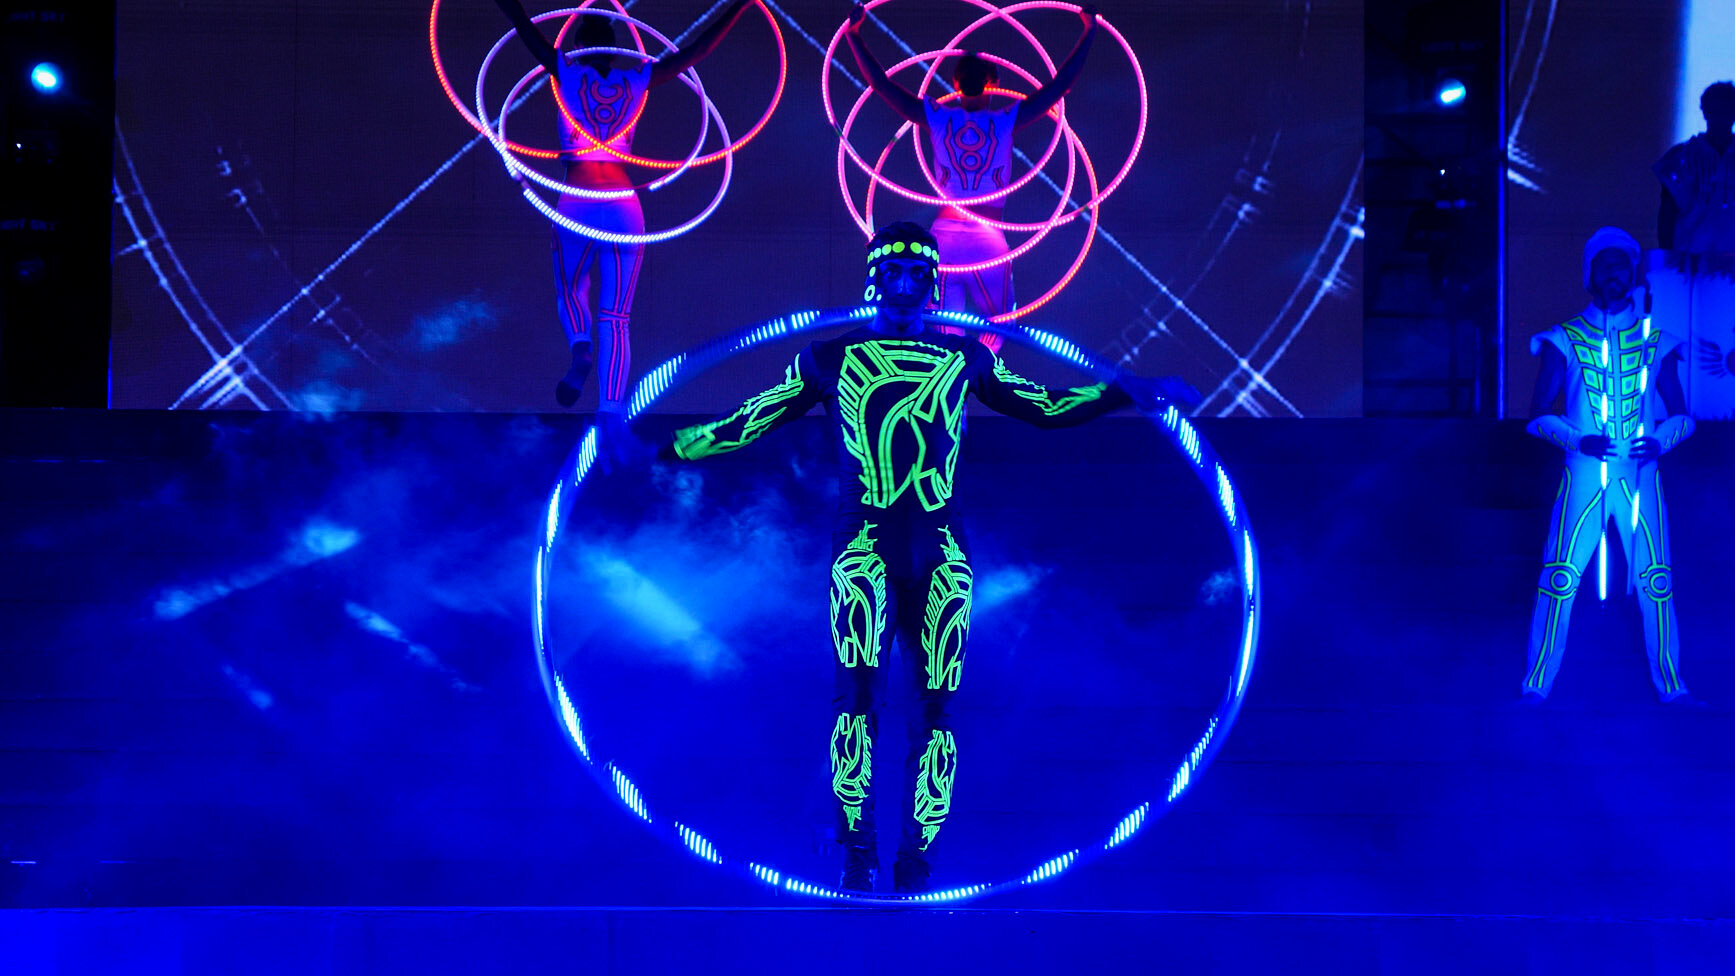 Futuristic LED Cyr Wheel Artist with UV Costume, International Beer Festival Qingdao, China